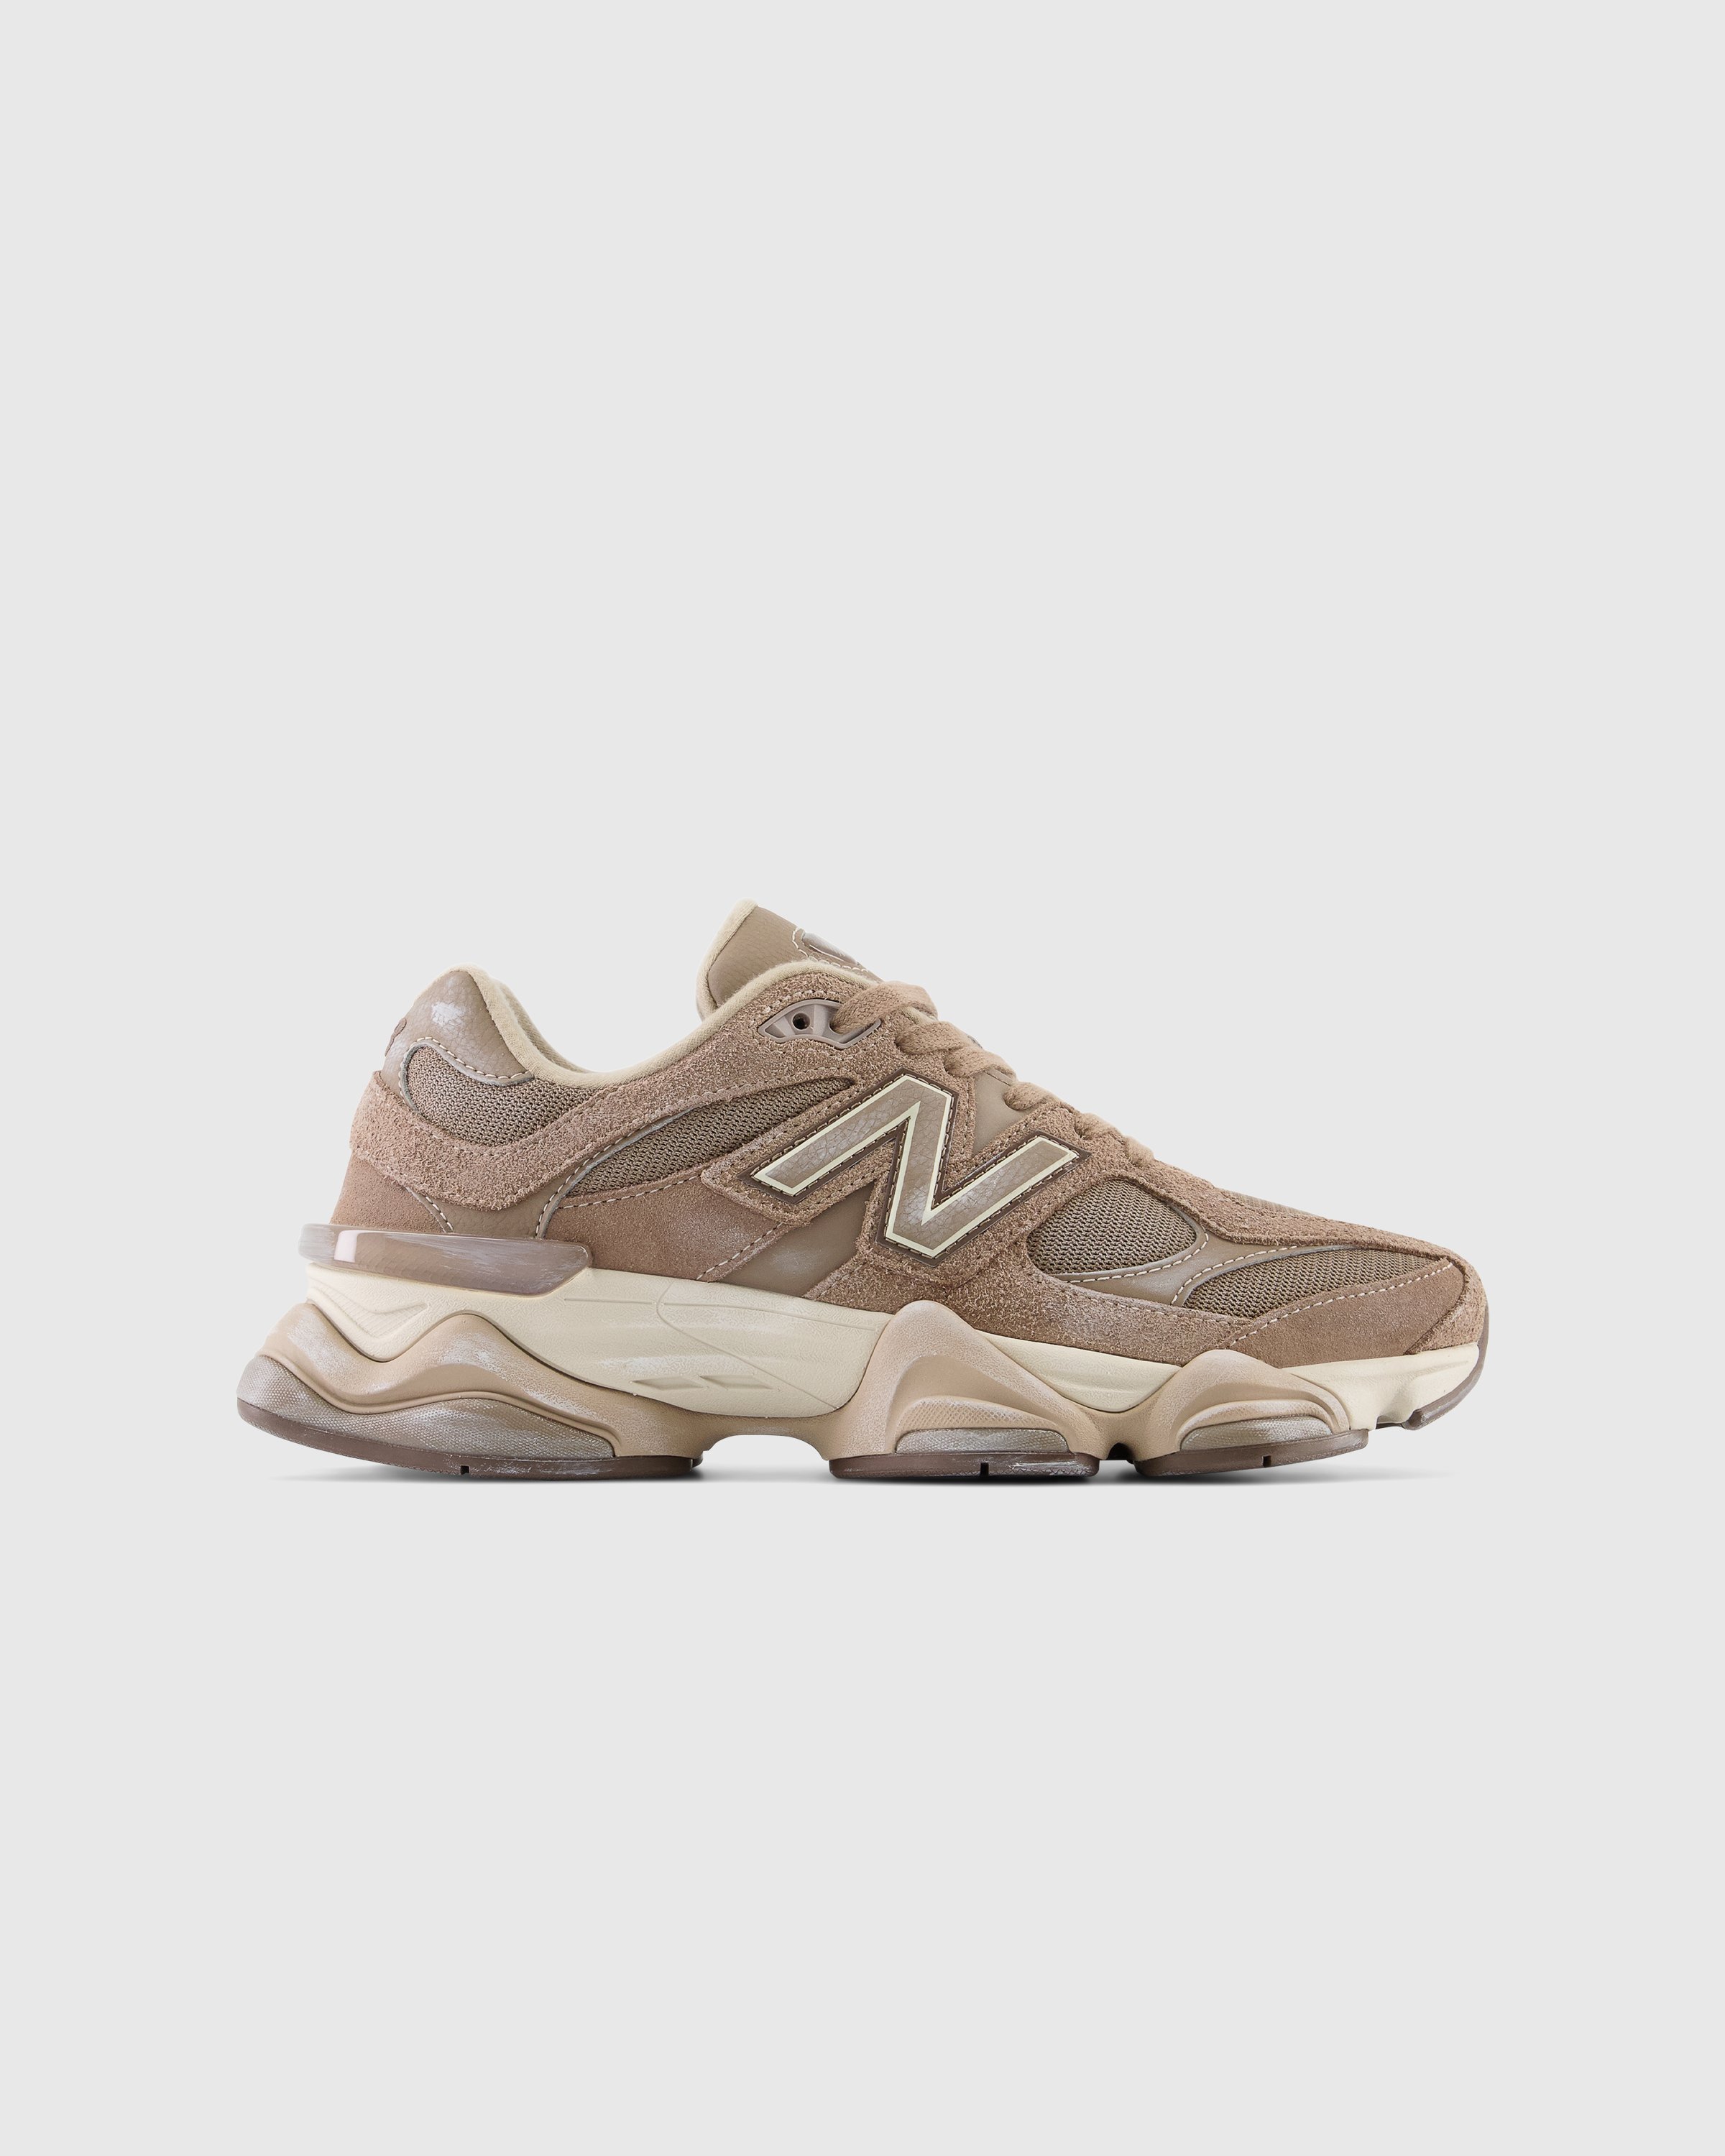 New Balance - U 9060 PB Mushroom - Footwear - Brown - Image 1